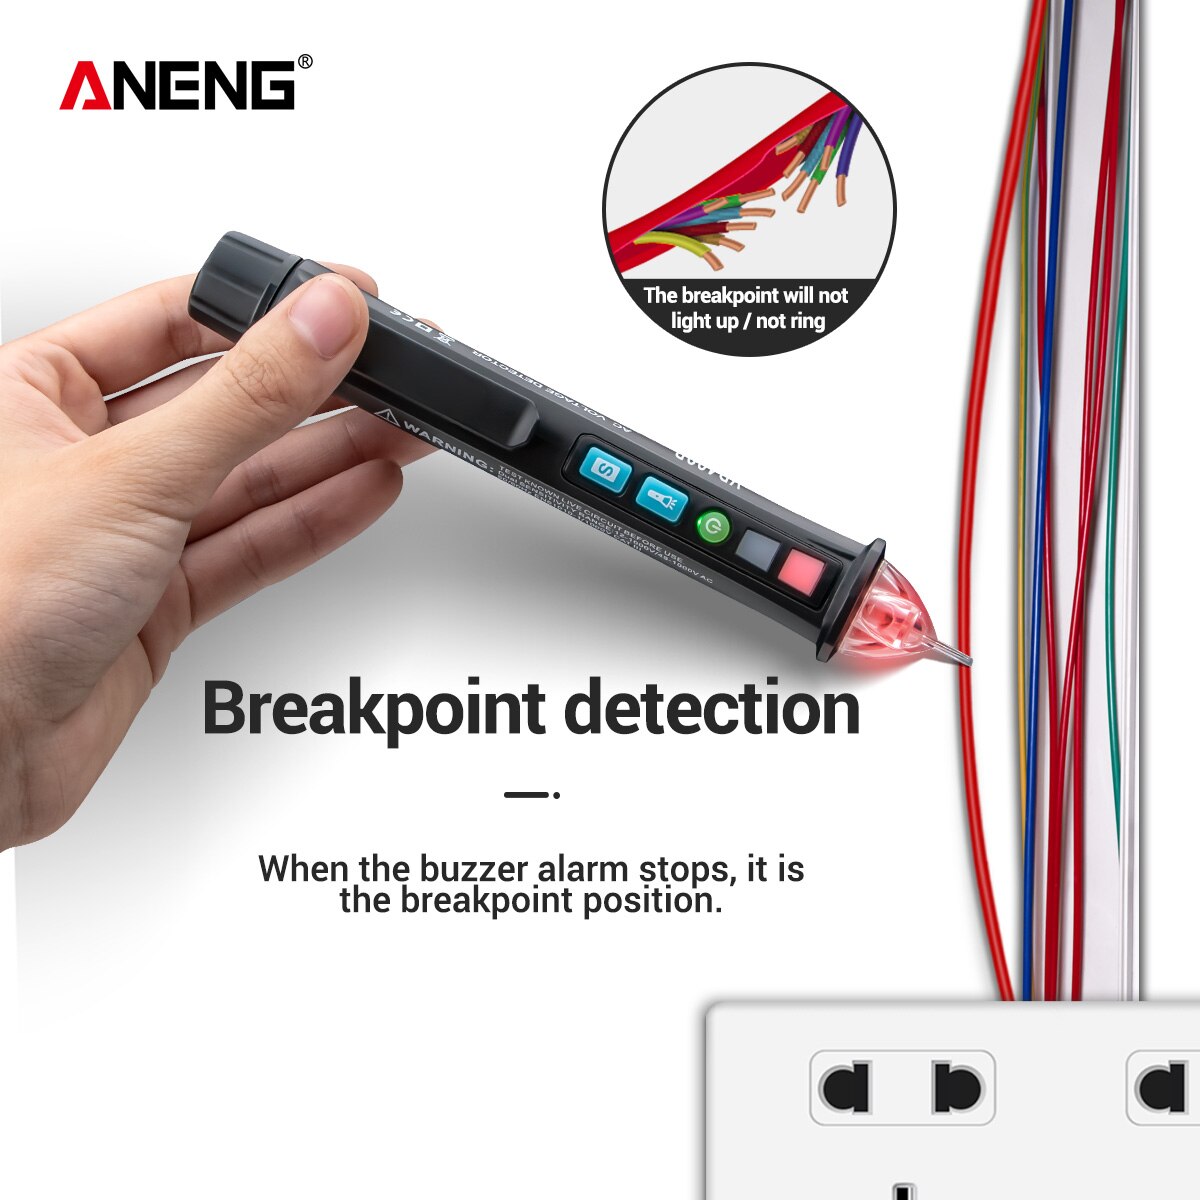 ANENG VD409B Non-Contact AC Voltage Detector Tester Meter 12V-1000v Pen Style Electric Indicator LED Outlet Voltage Dectetor